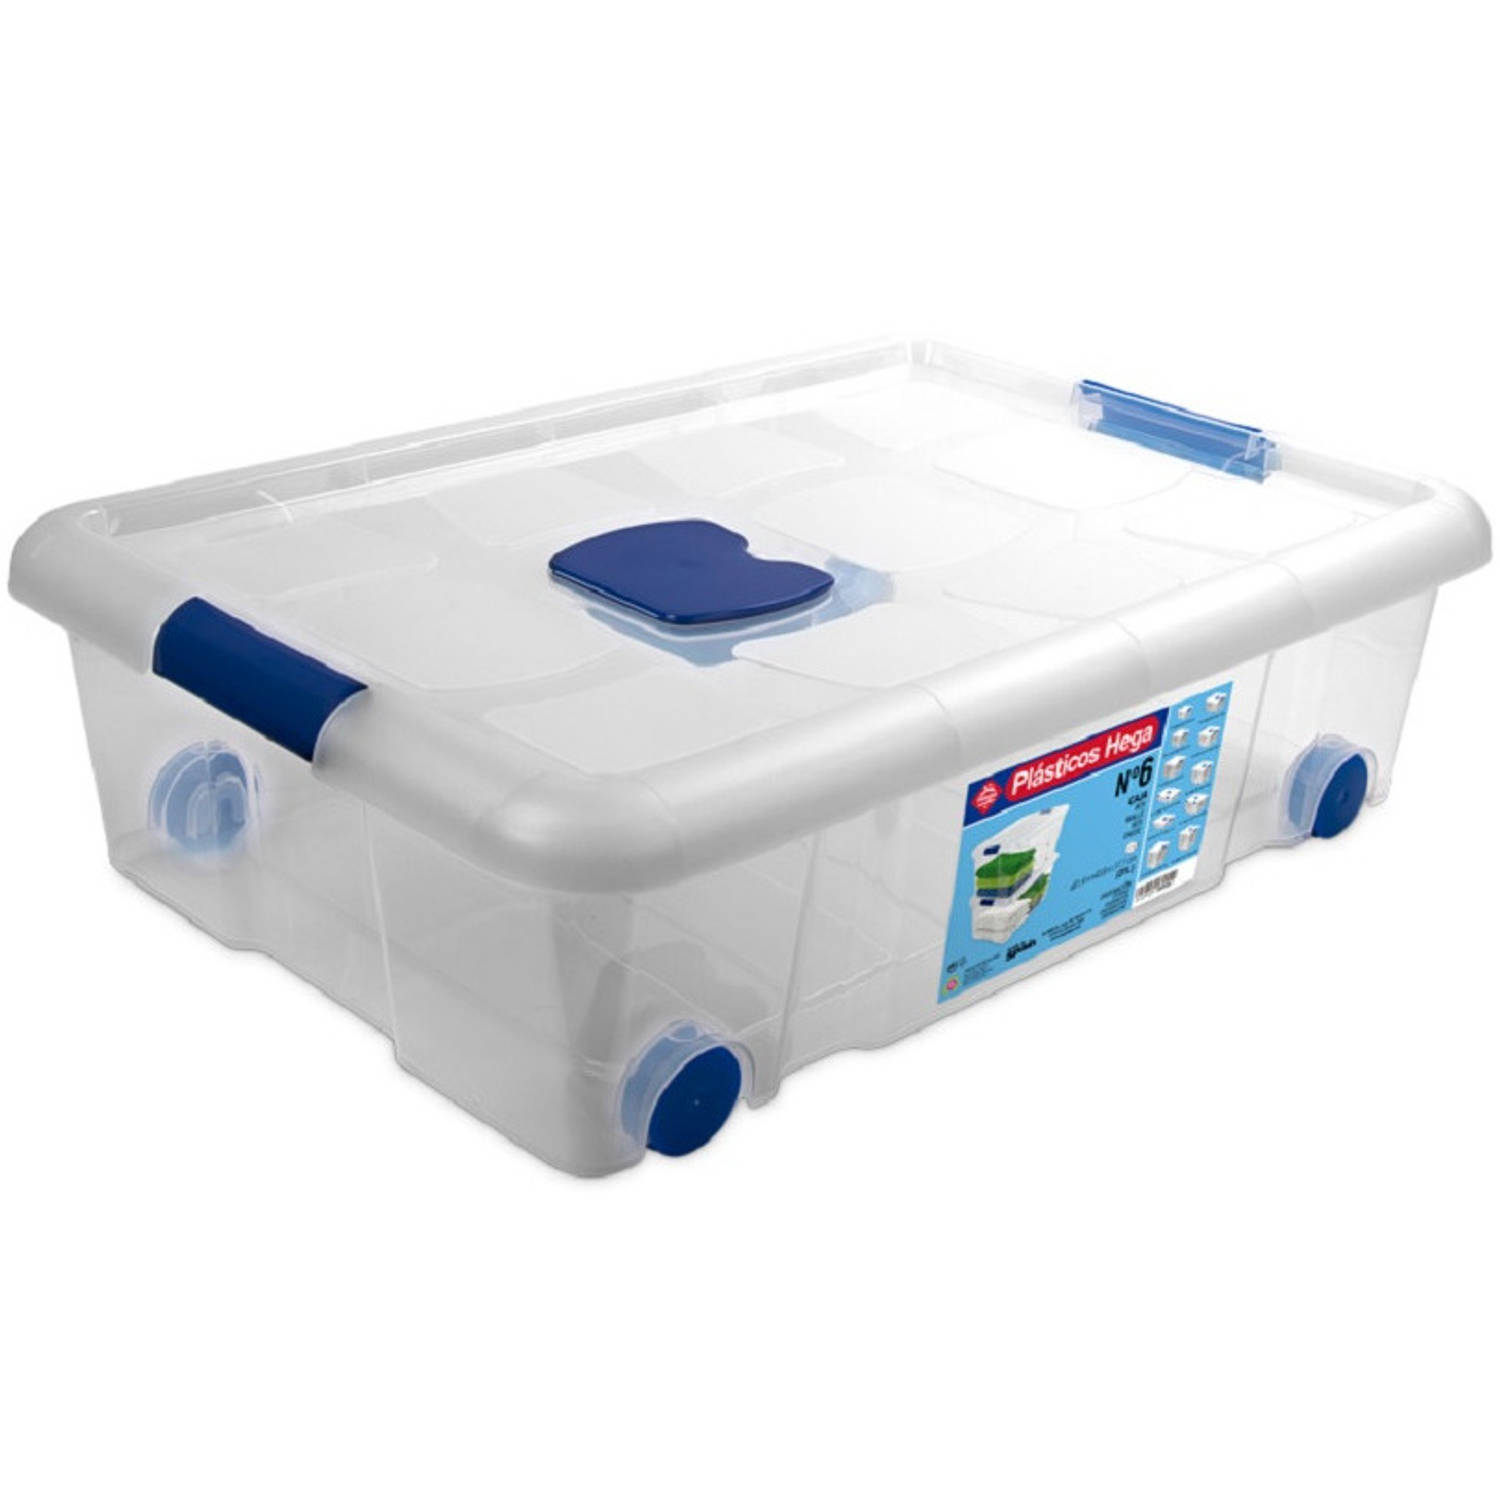 dubbele Norm handelaar 1x Opbergboxen/opbergdozen met deksel en wieltjes 31 liter kunststof  transparant/blauw - Opbergbox | Blokker